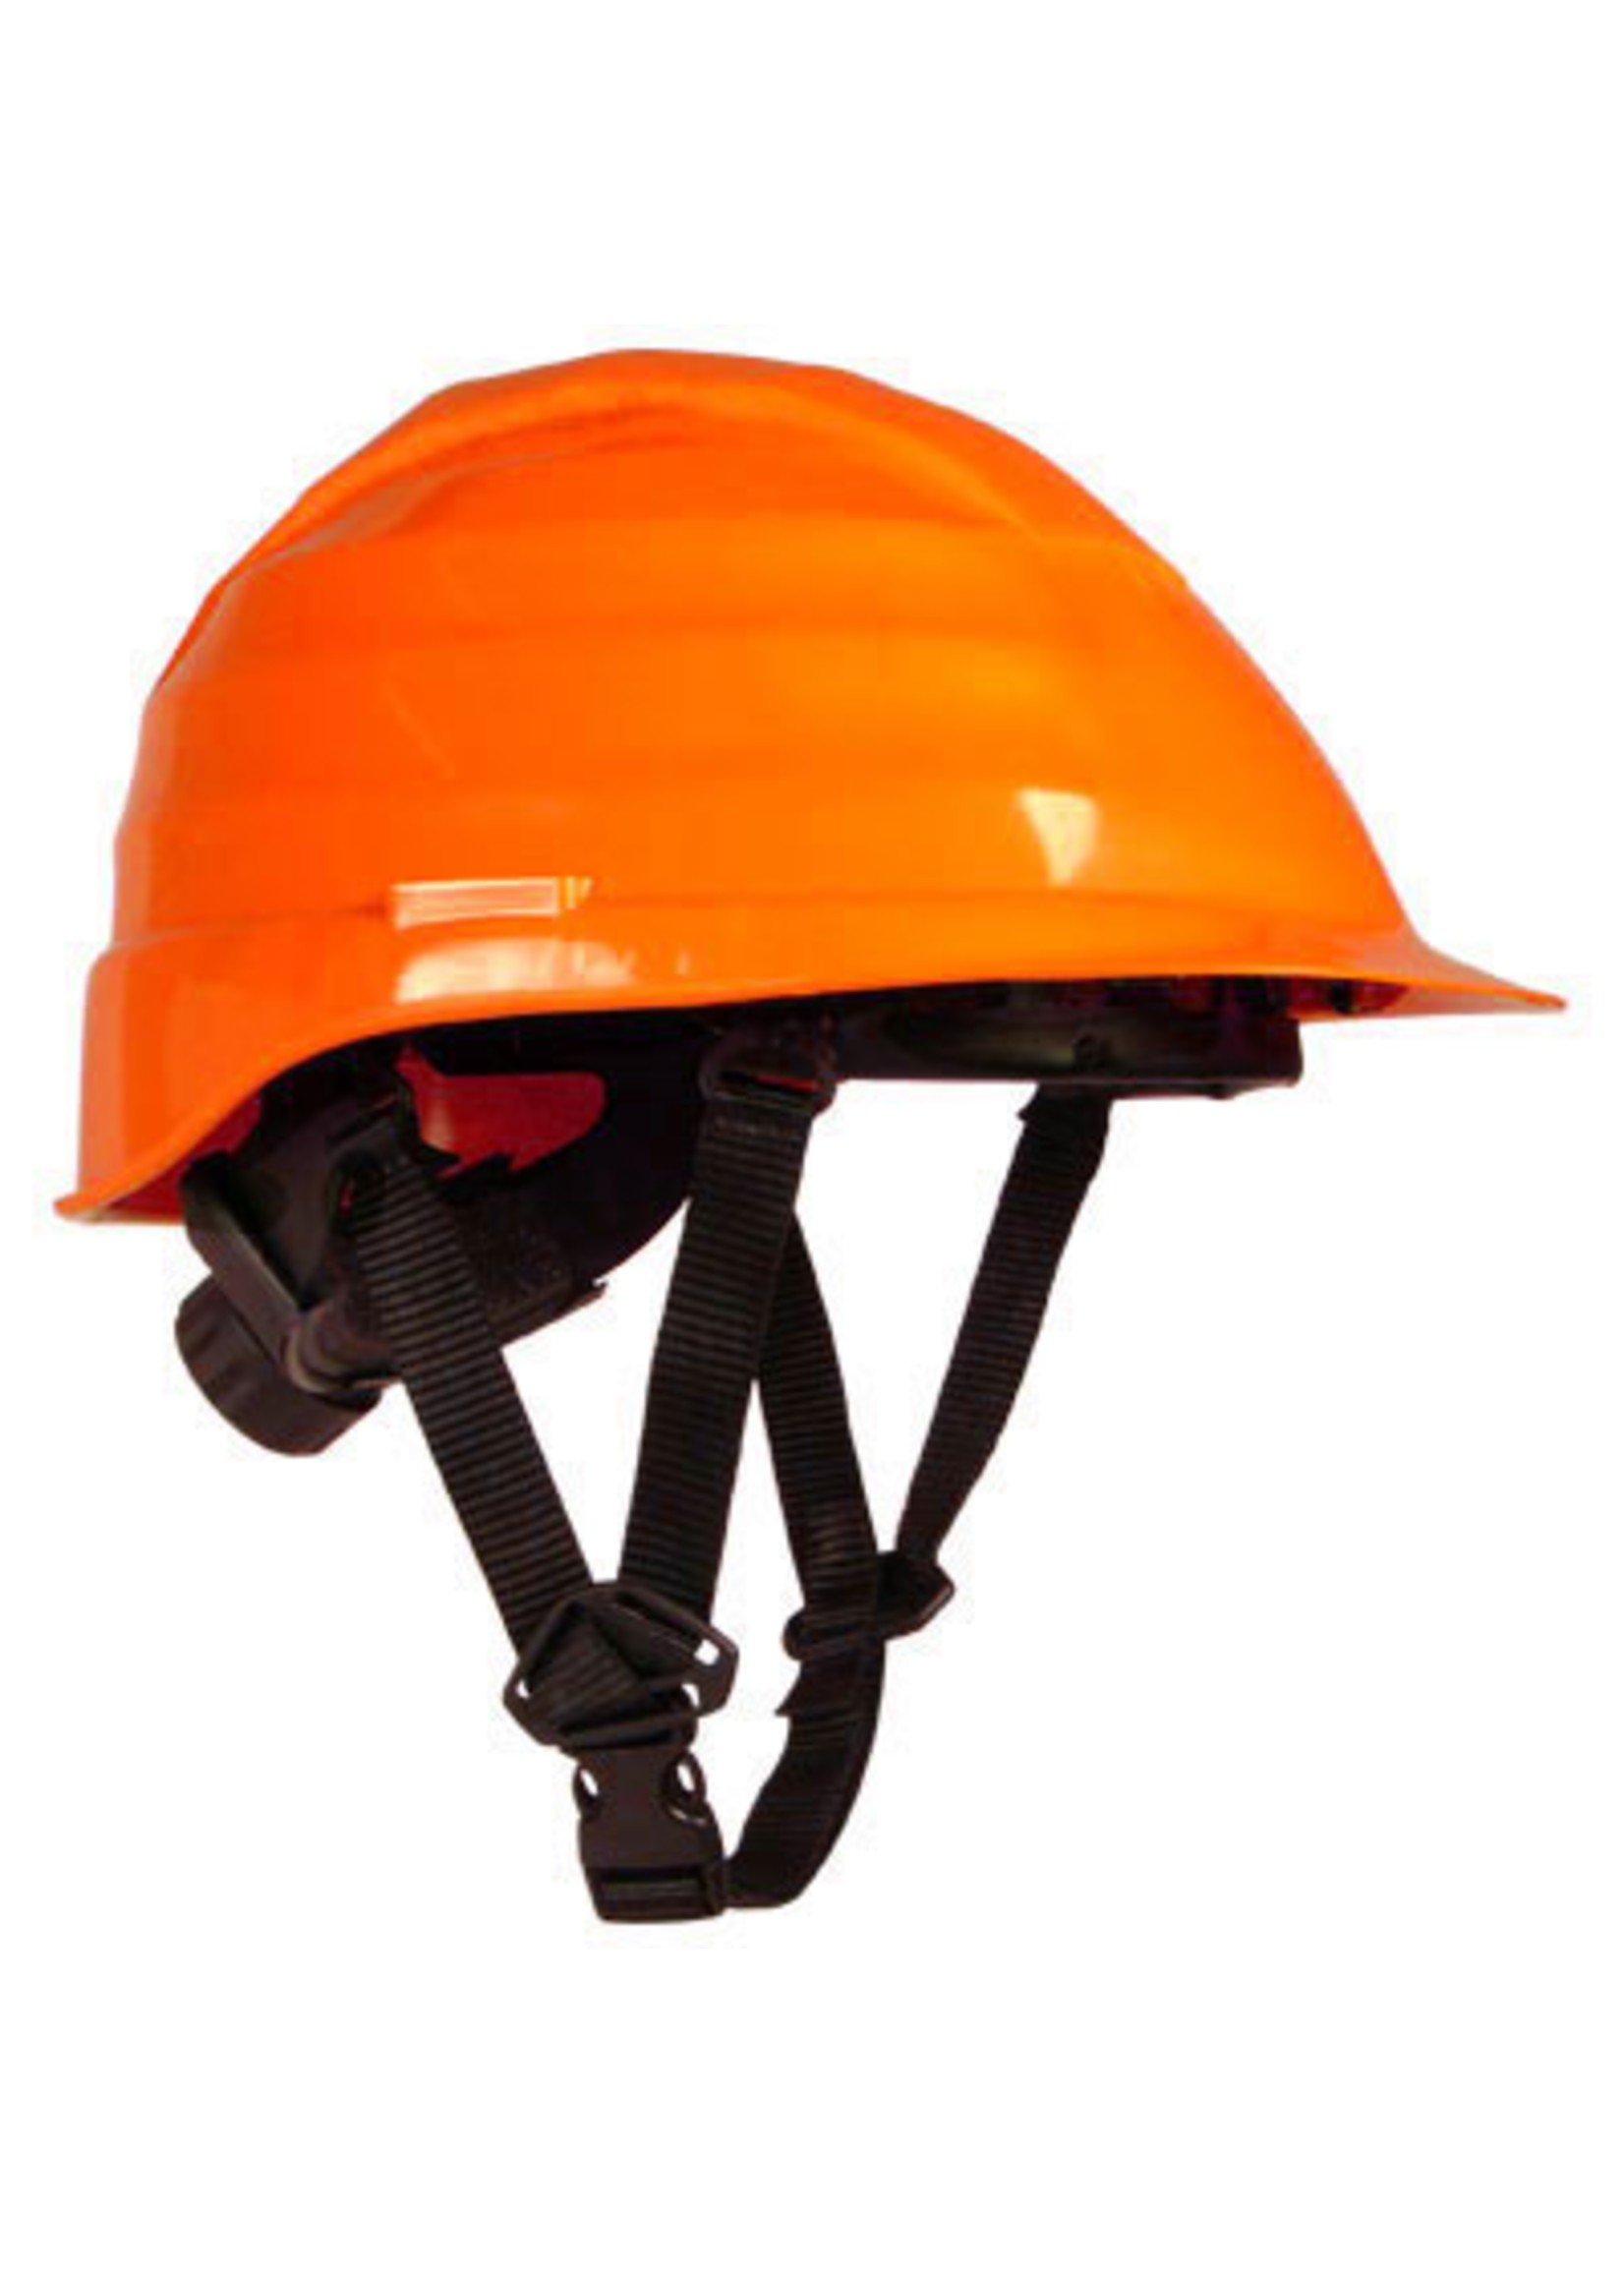 Rockman Rockman Dielectric Arborist Helmet In Orange with 4 Point Chinstrap